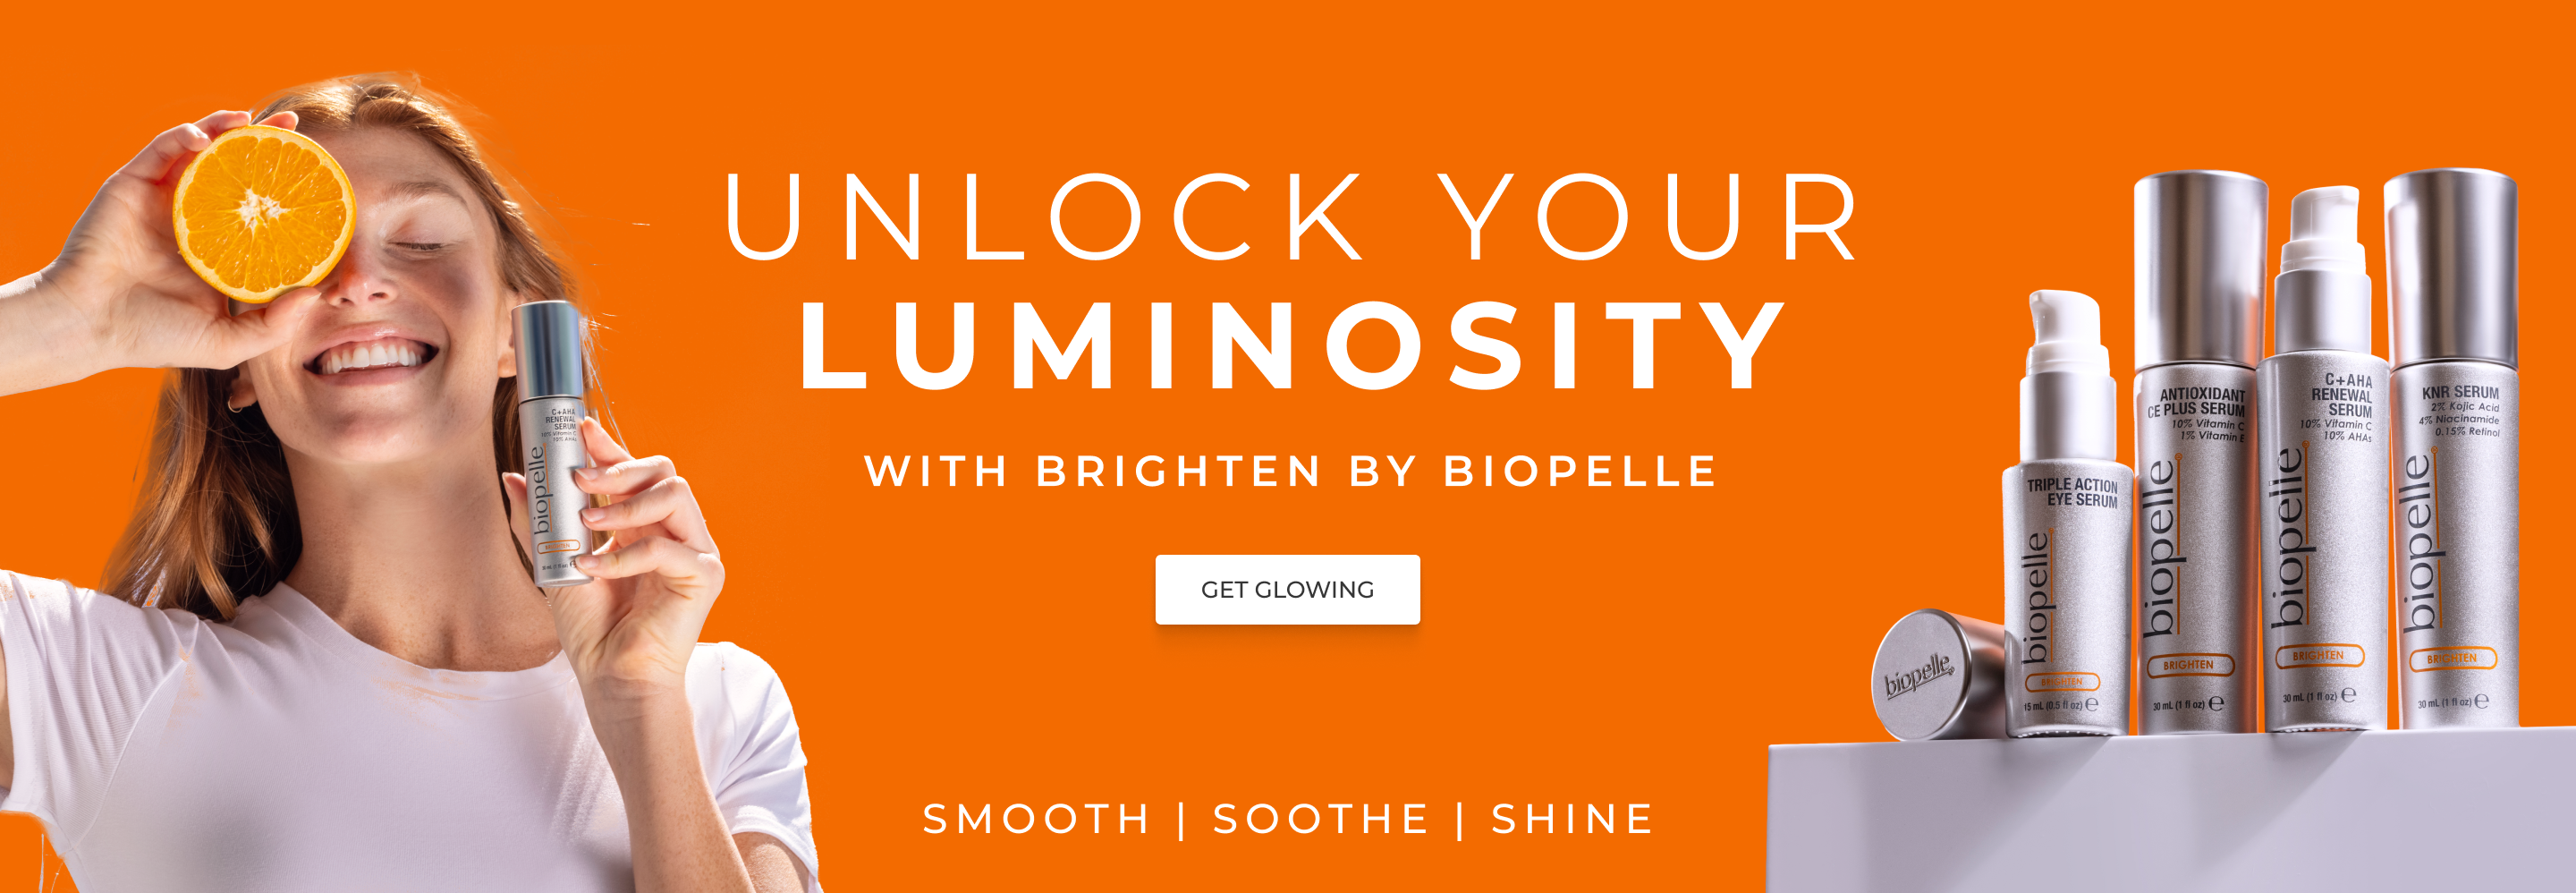 Unlock your luminosity. with Biopelle Brighten.